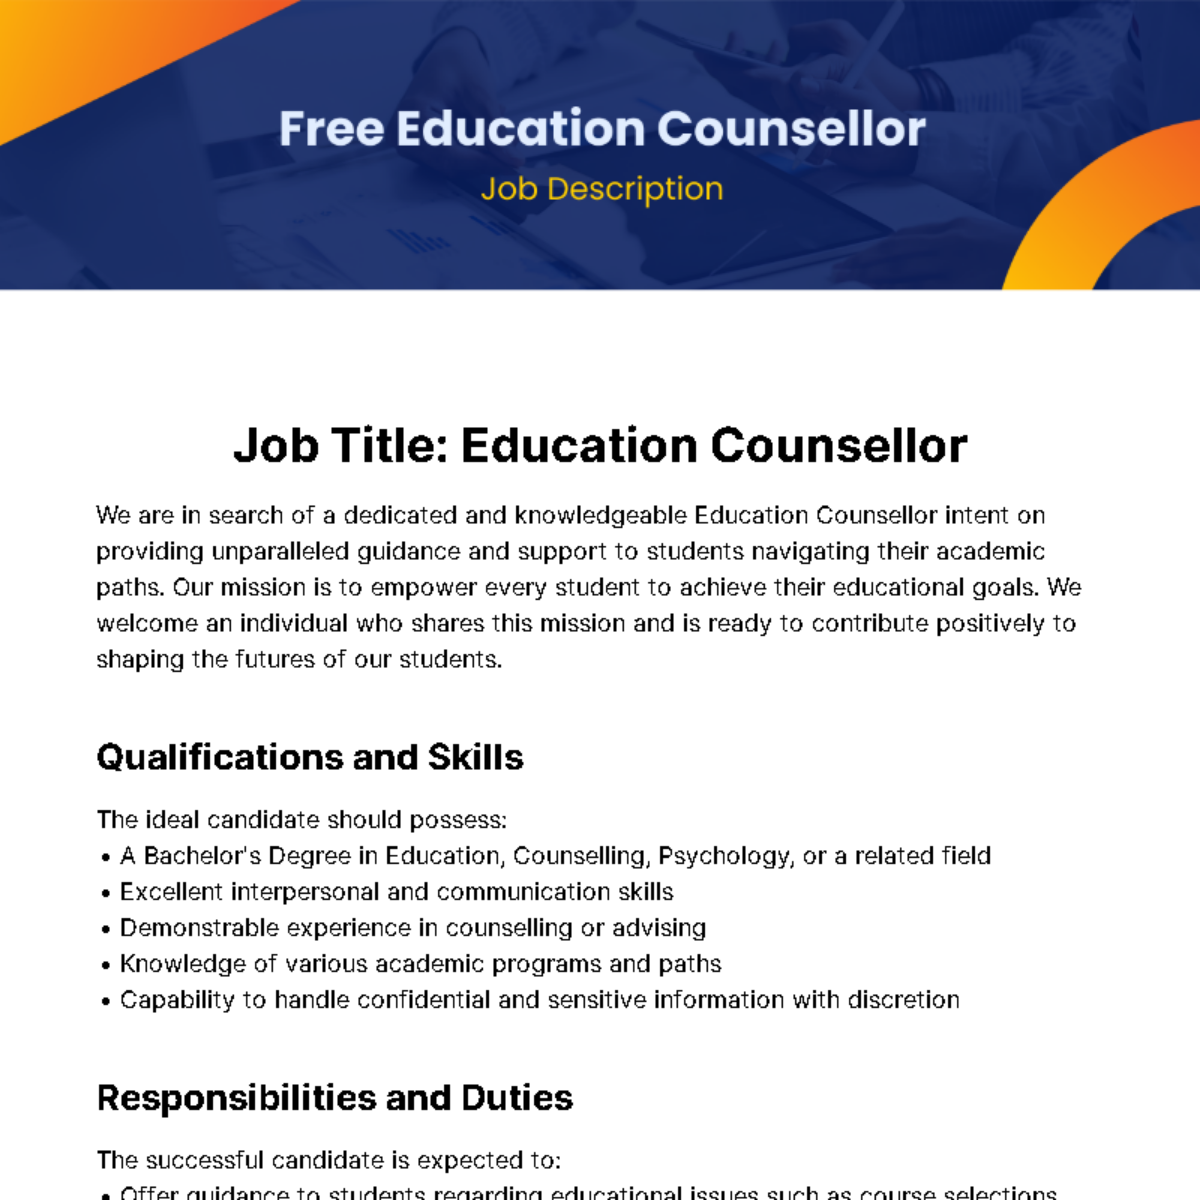 Free Education Counsellor Job Description Template